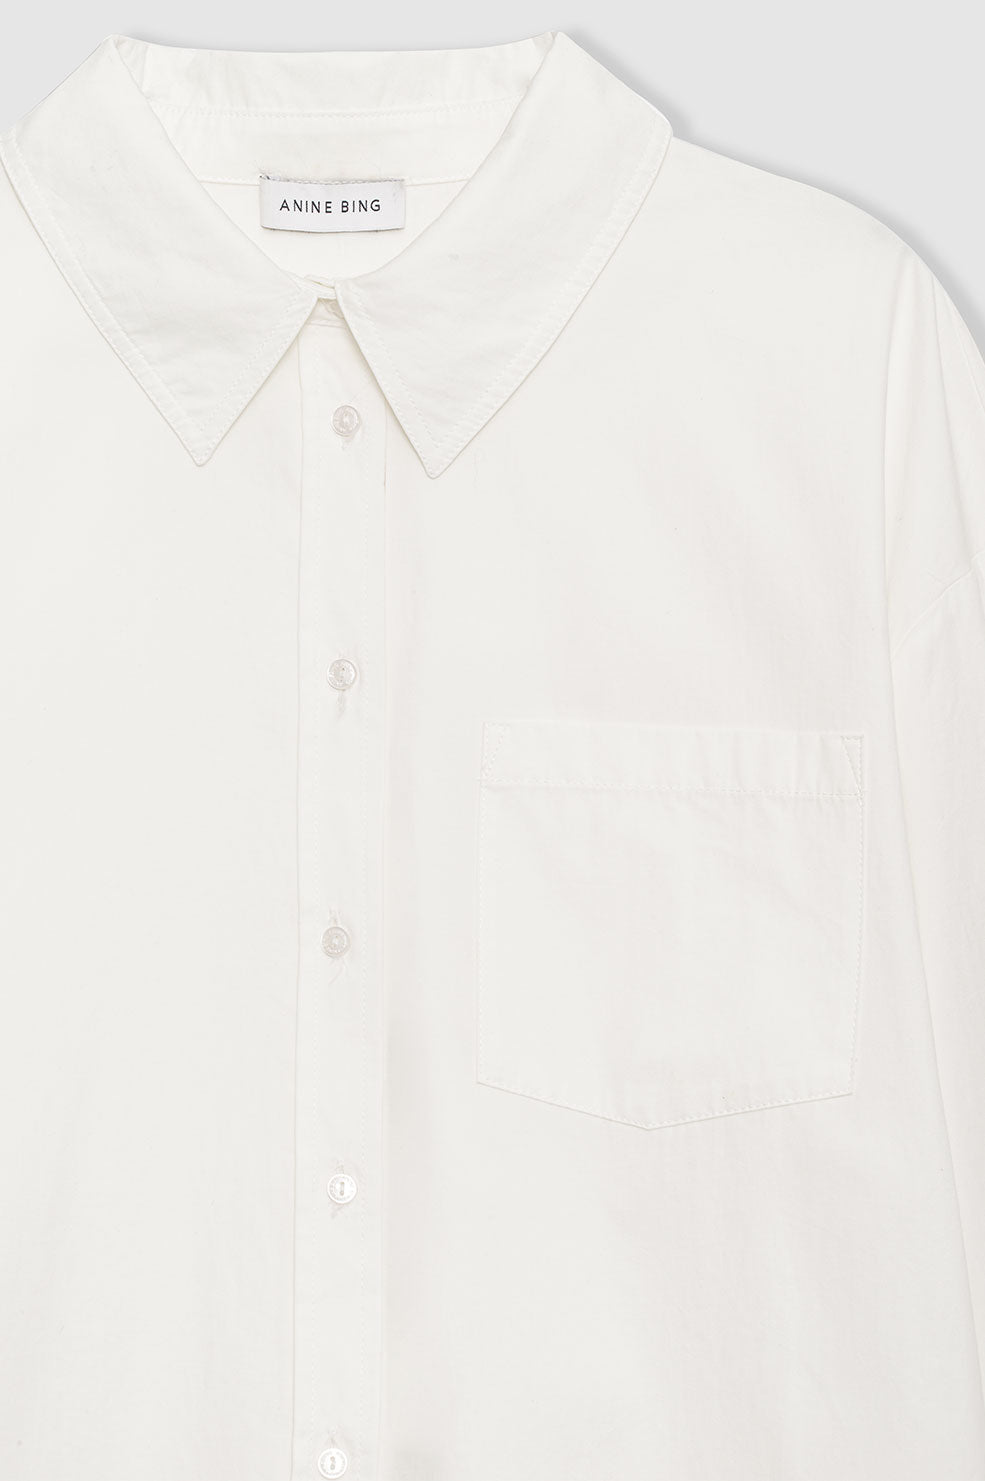 ANINE BING Mika Shirt - White - Detail View